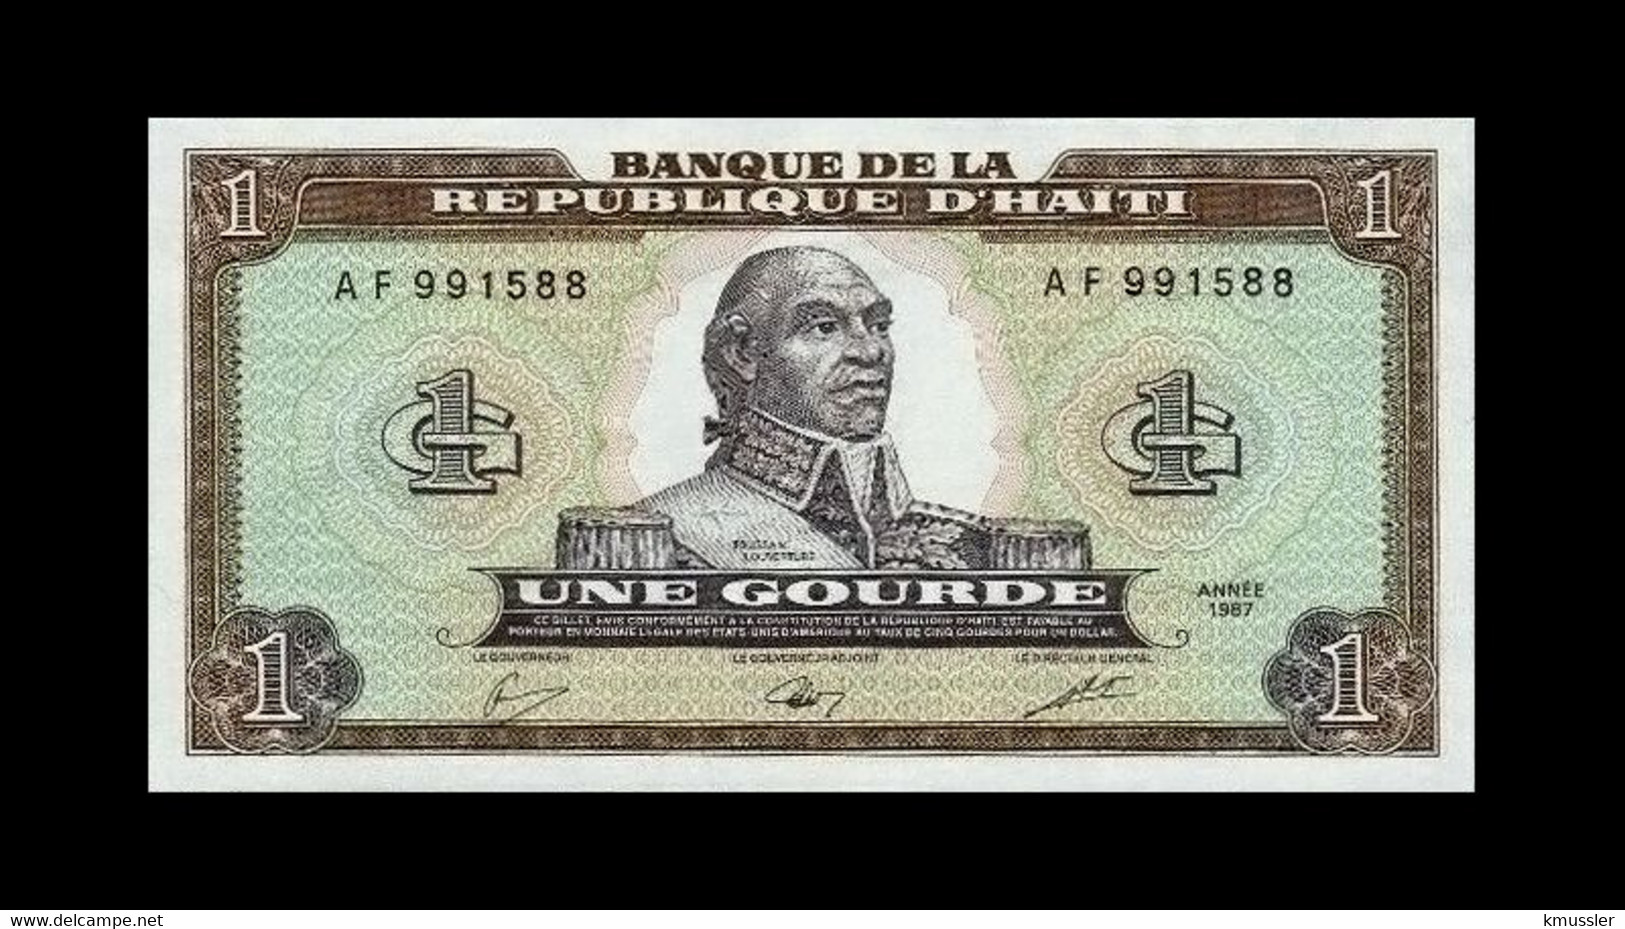 # # # Banknote Aus Haiti 1 Gourde UNC # # # - Haïti